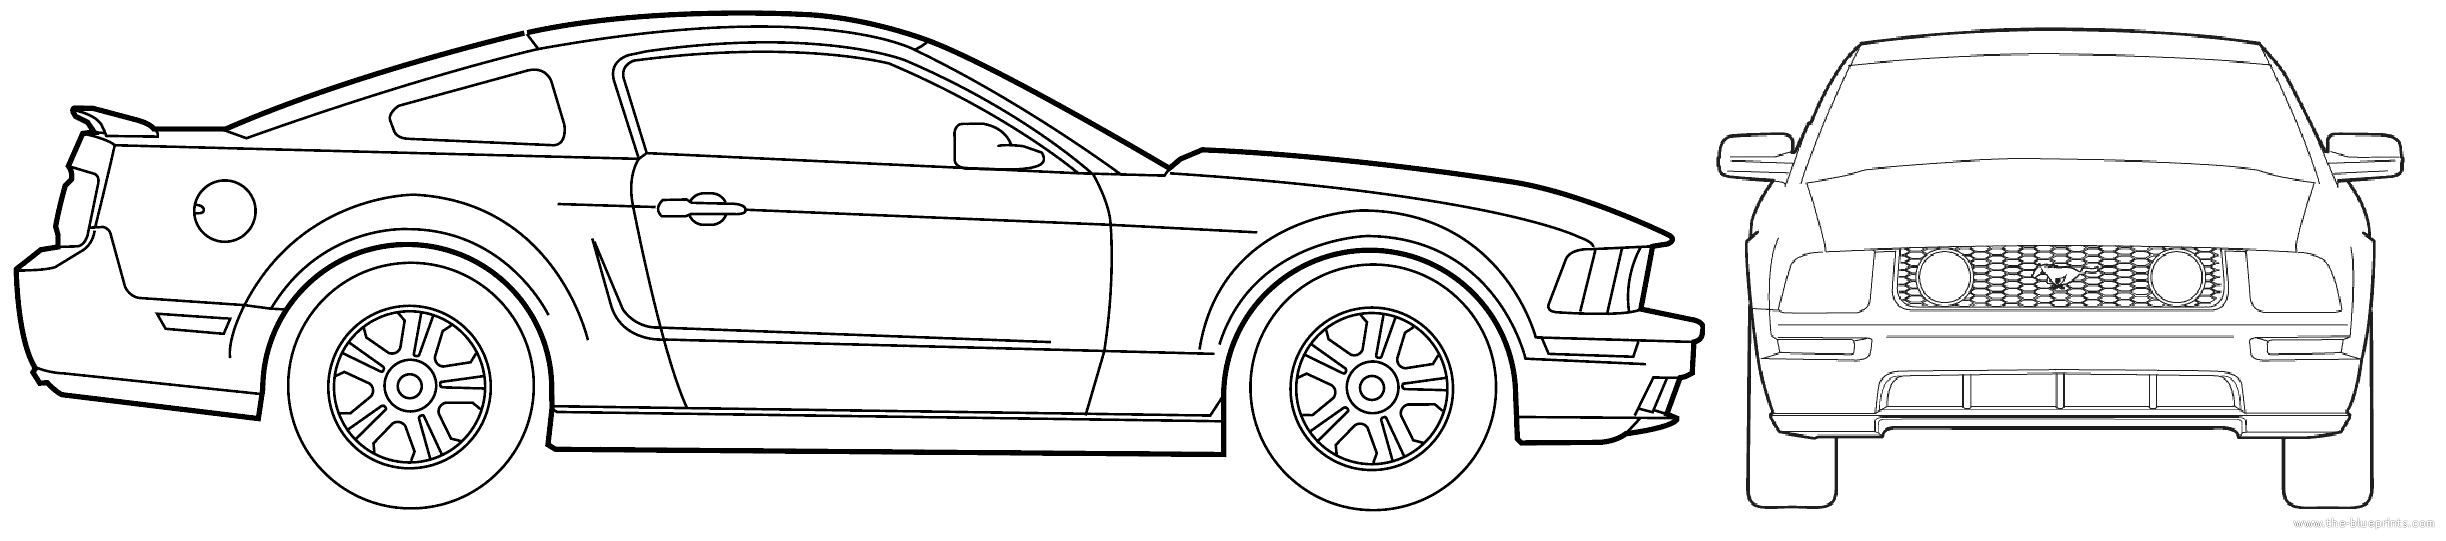 Ford gt 2005 blueprints #6